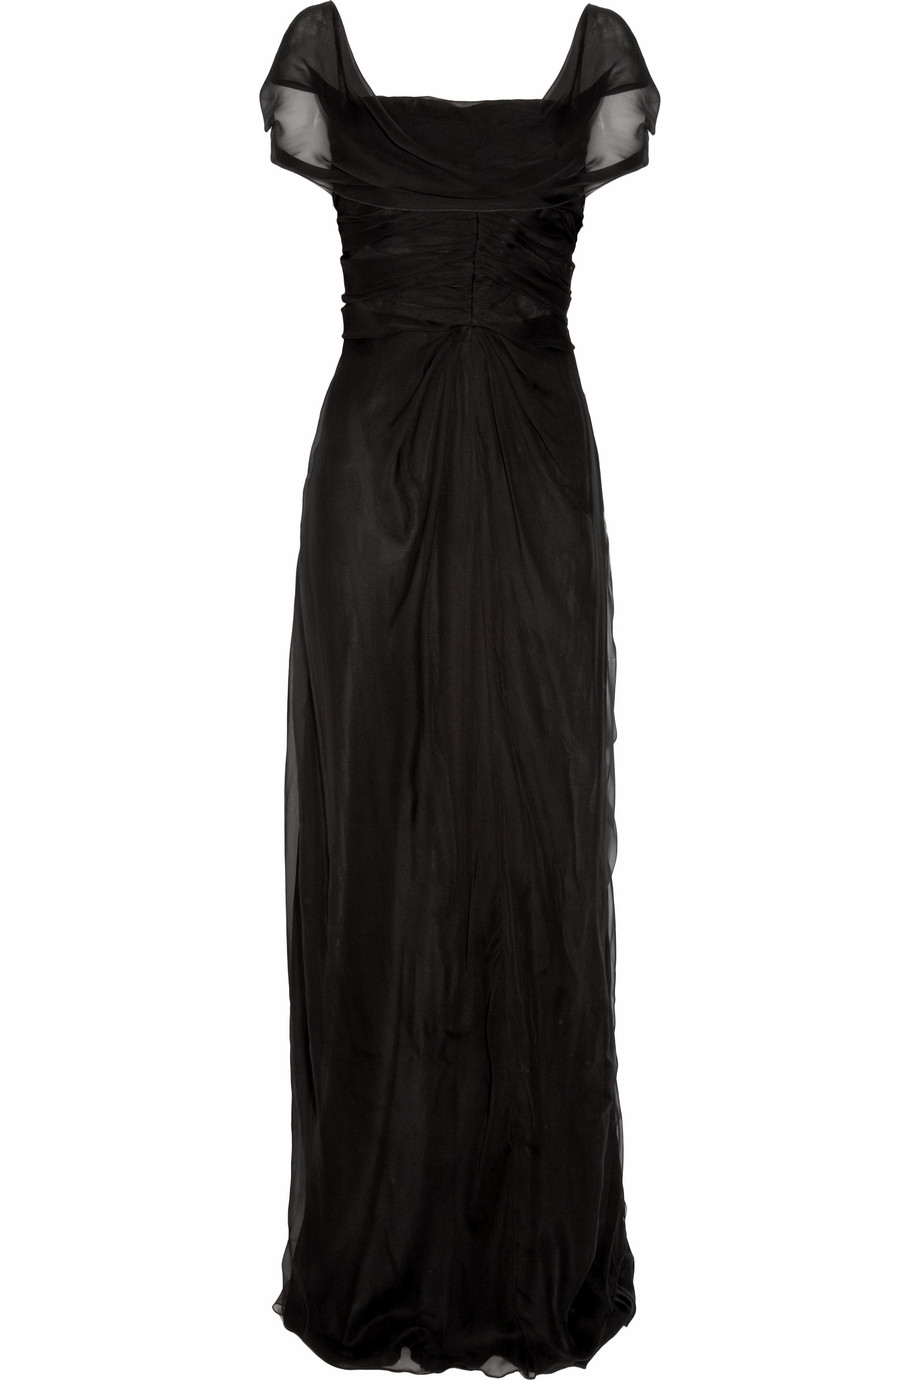 Alberta Ferretti Ruched Silk-chiffon Gown in Black | Lyst